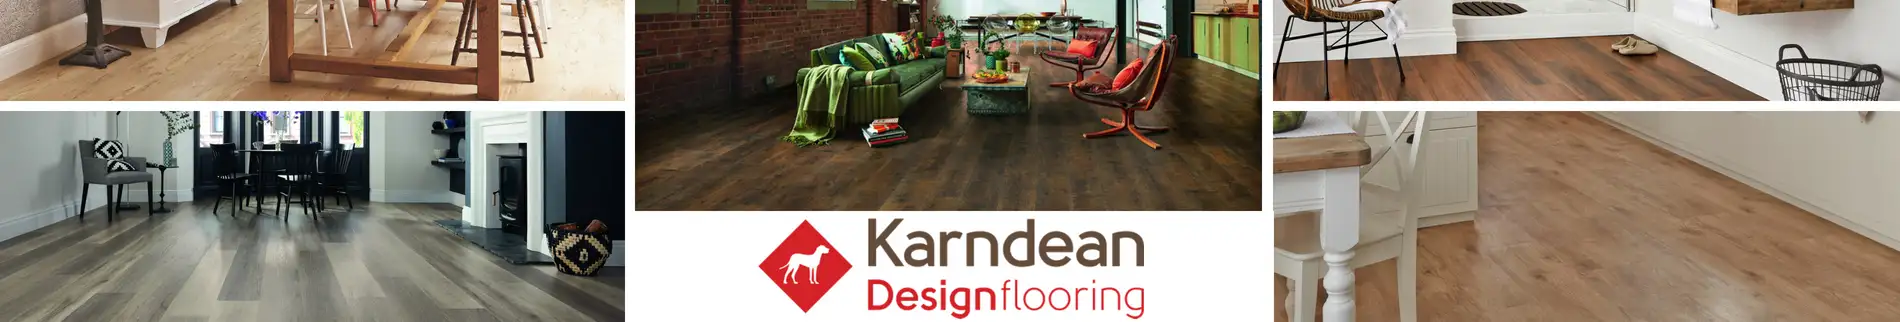 karndean Flooring example